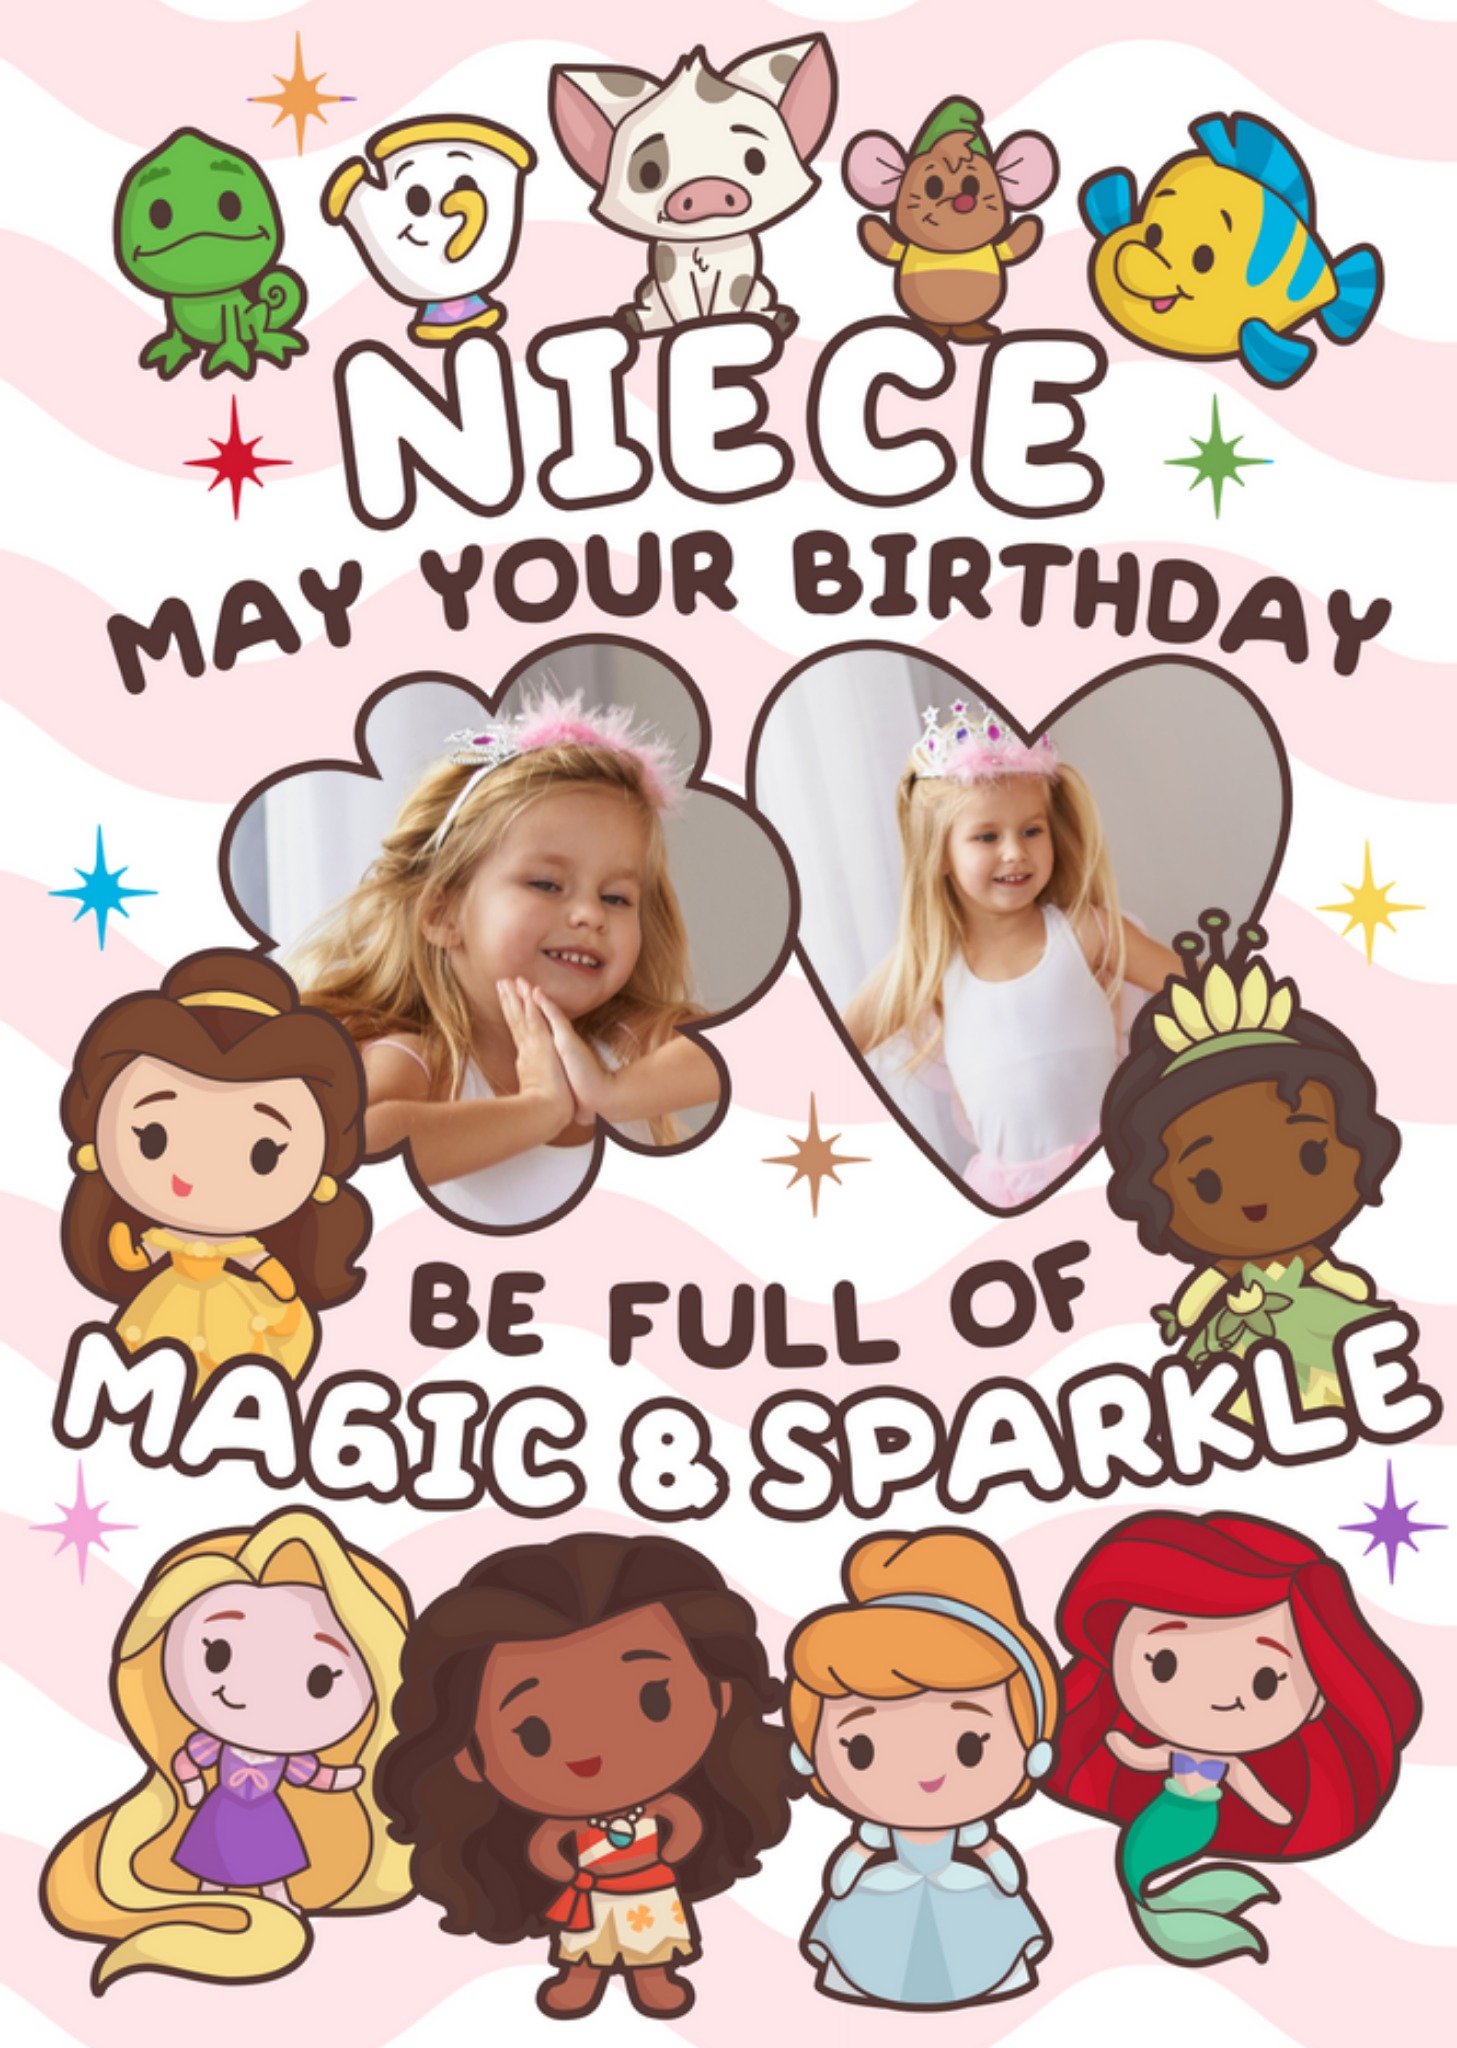 Disney Princess Niece May Your Birthday Be Full Of Magic And Sparkle Cartoon Princess Illustrations 